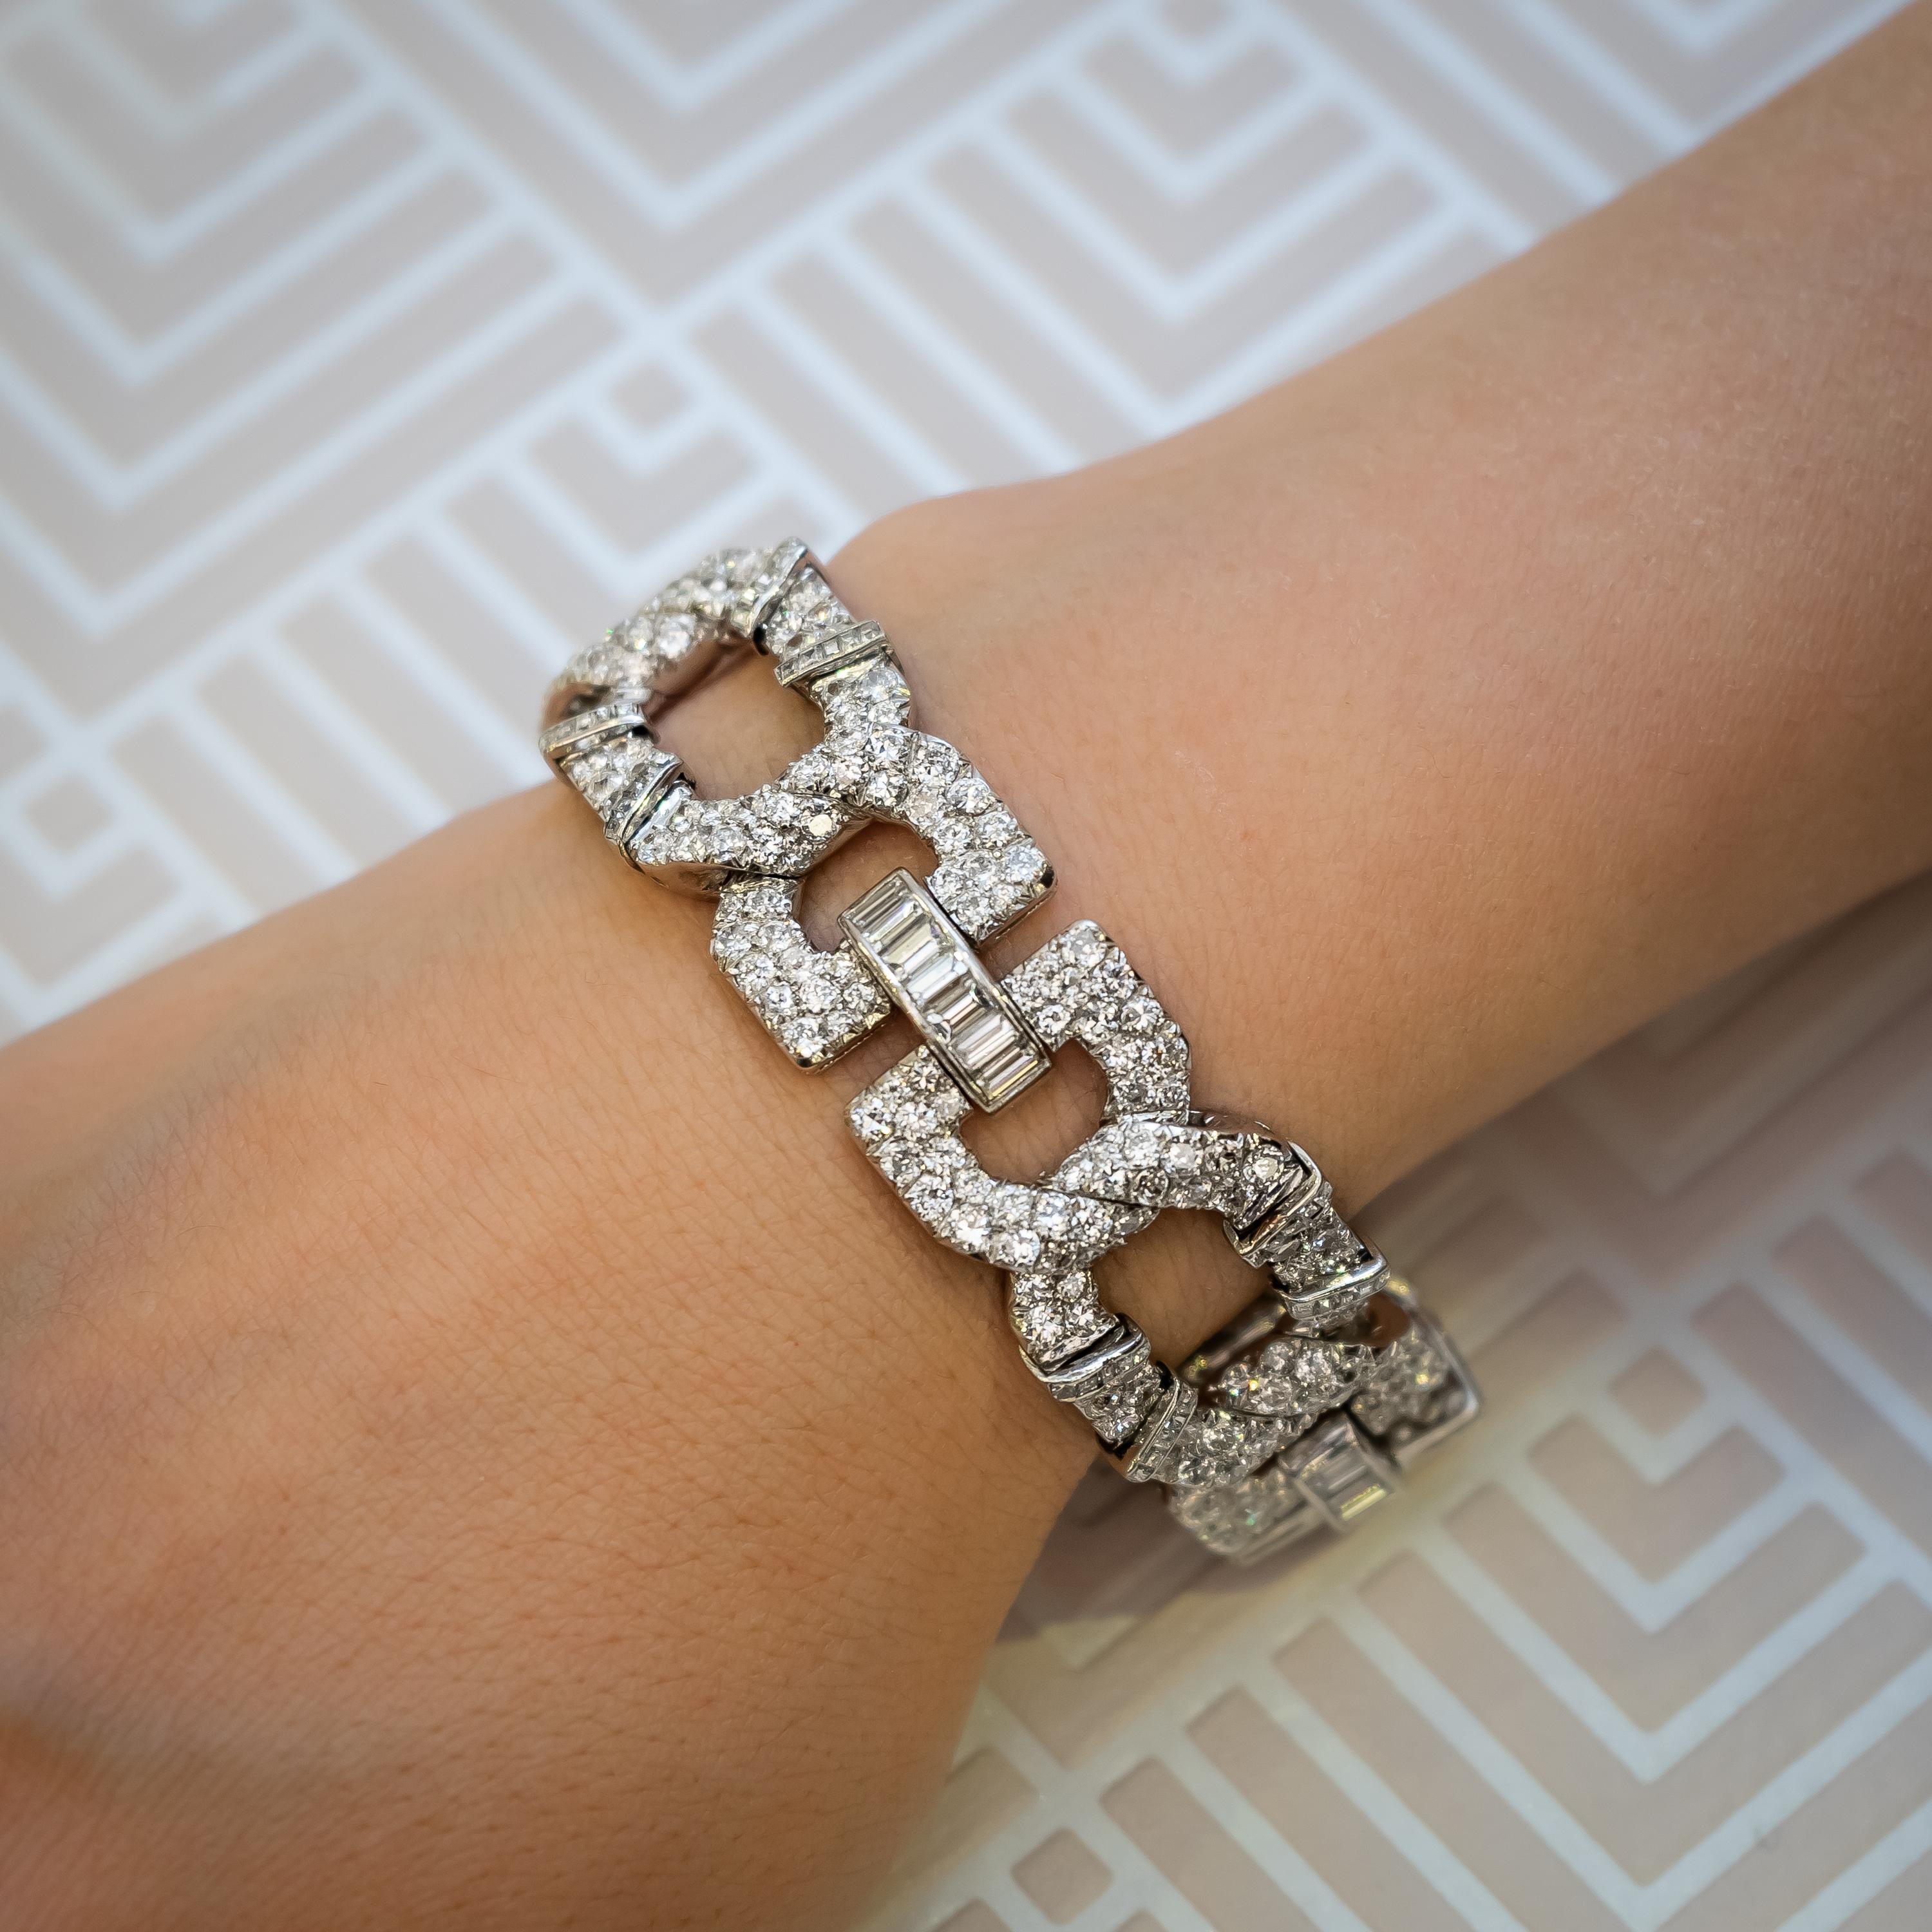 CRB6077117 - LOVE bracelet - White gold, brushed finish - Cartier